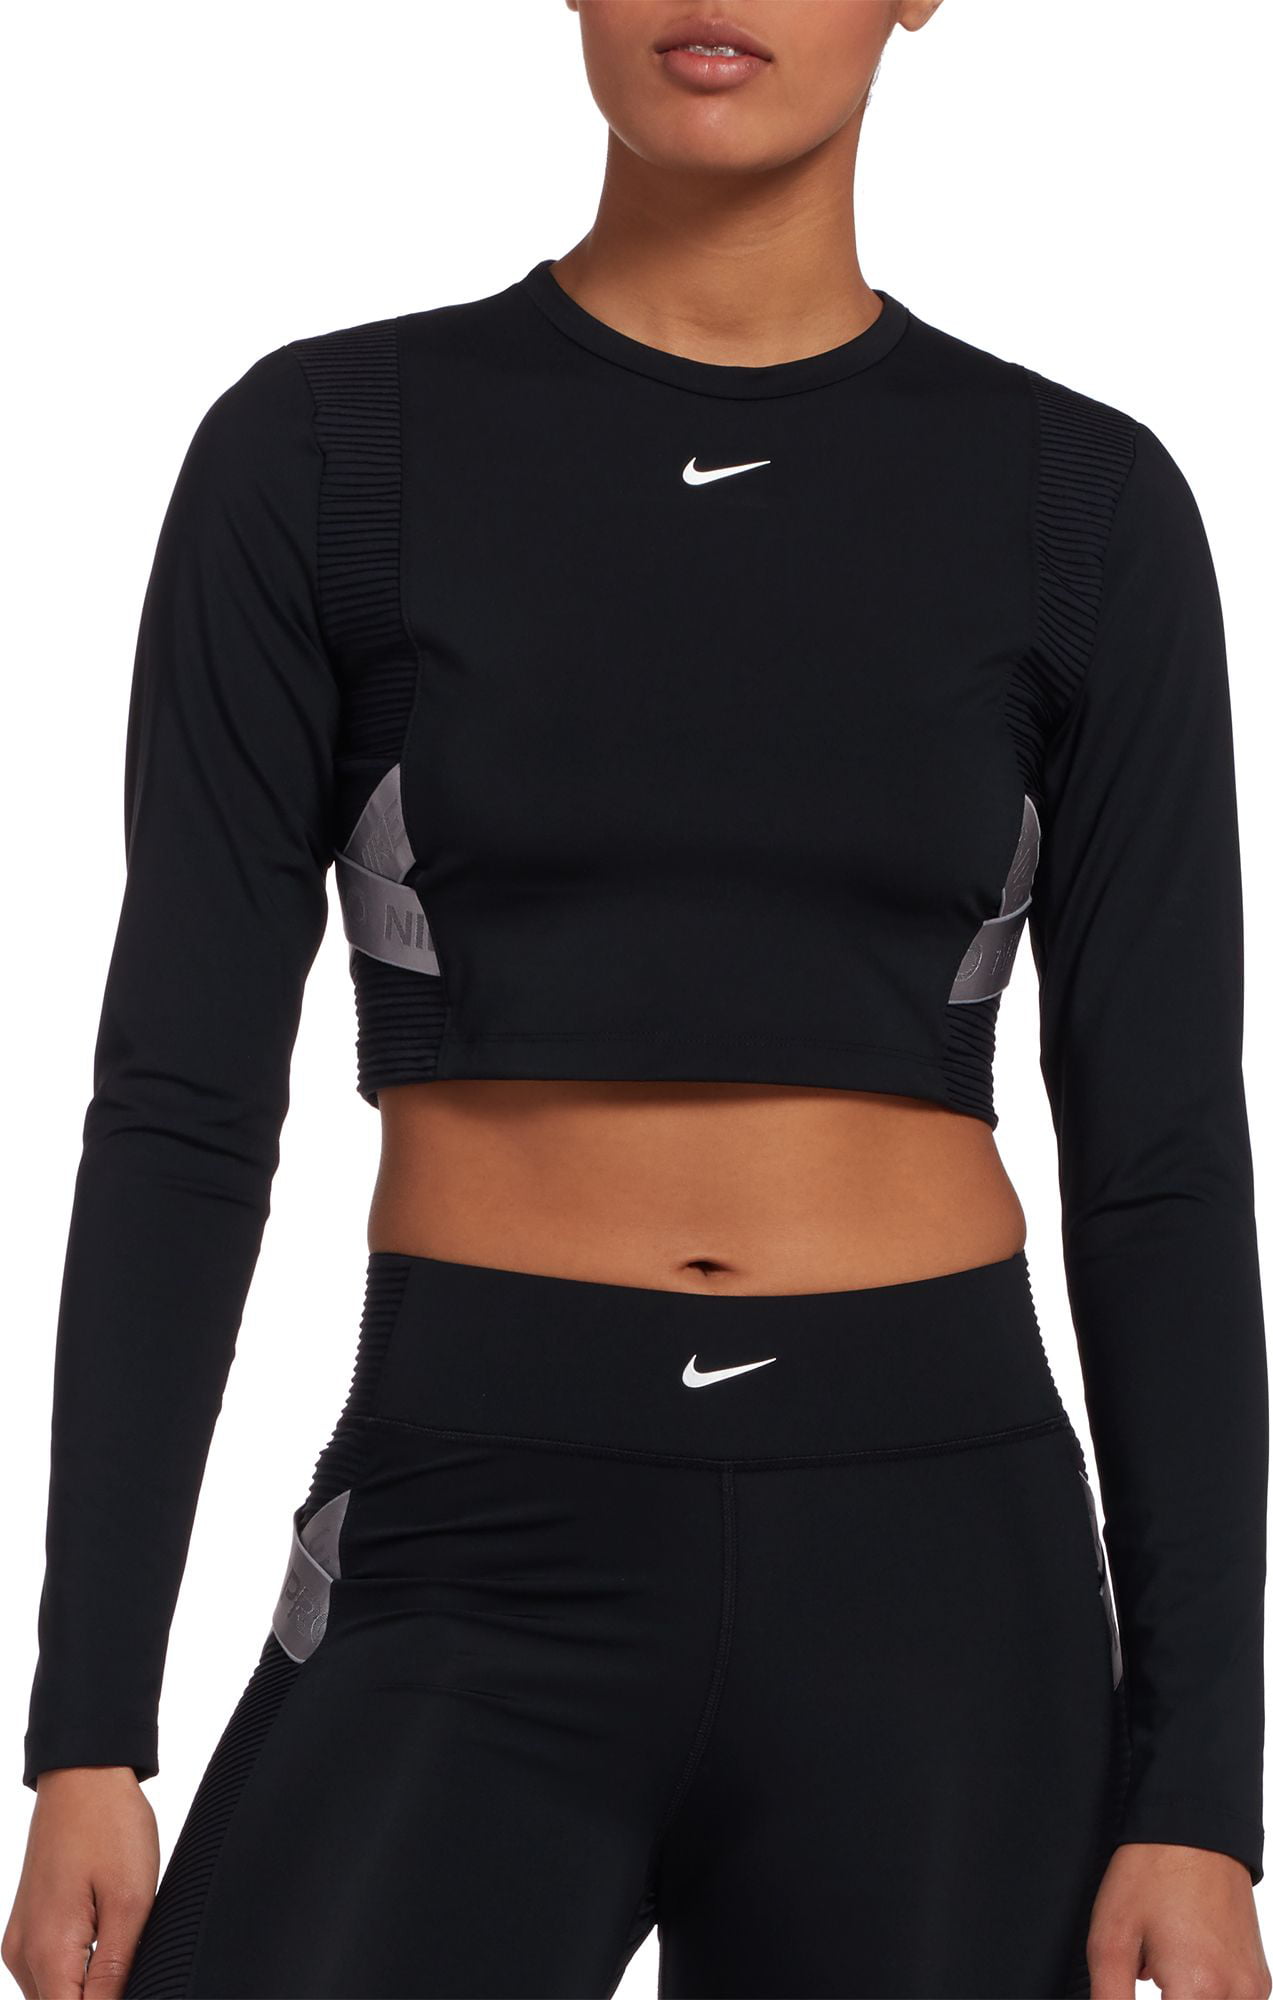 Nike - Nike Women's AeroAdapt Pro Long Sleeve Crop Top - Walmart.com ...